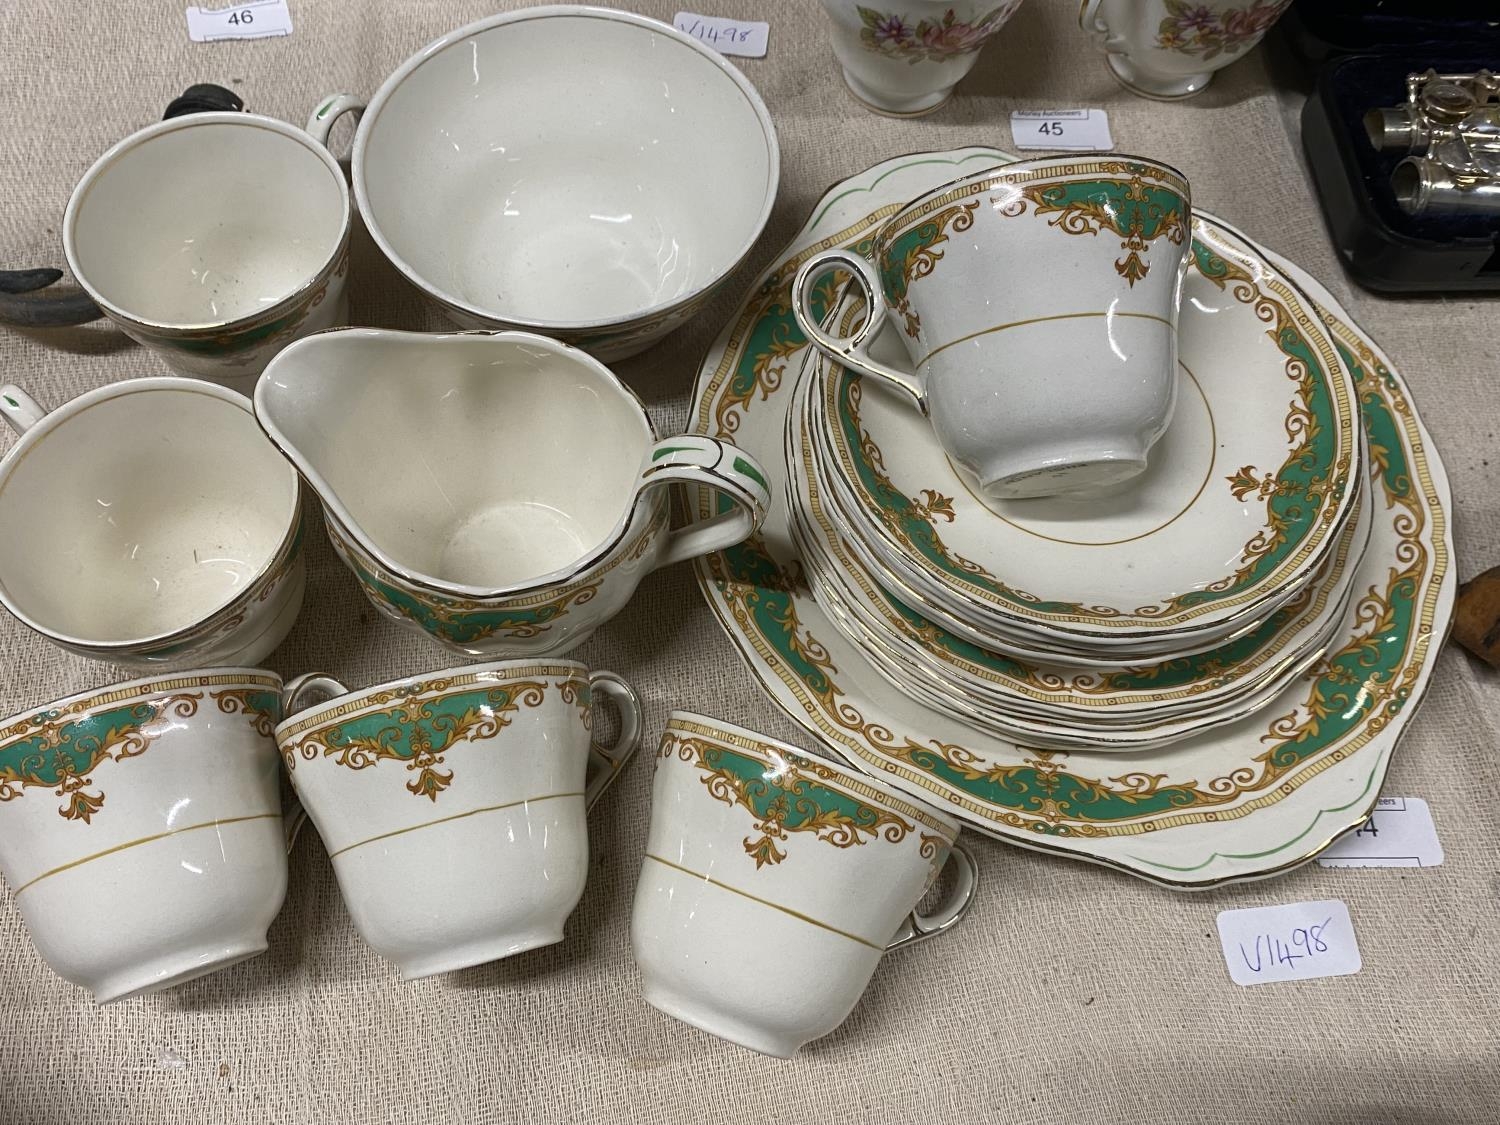 A vintage Grindley bone china tea service. 21 pieces. Shipping unavailable